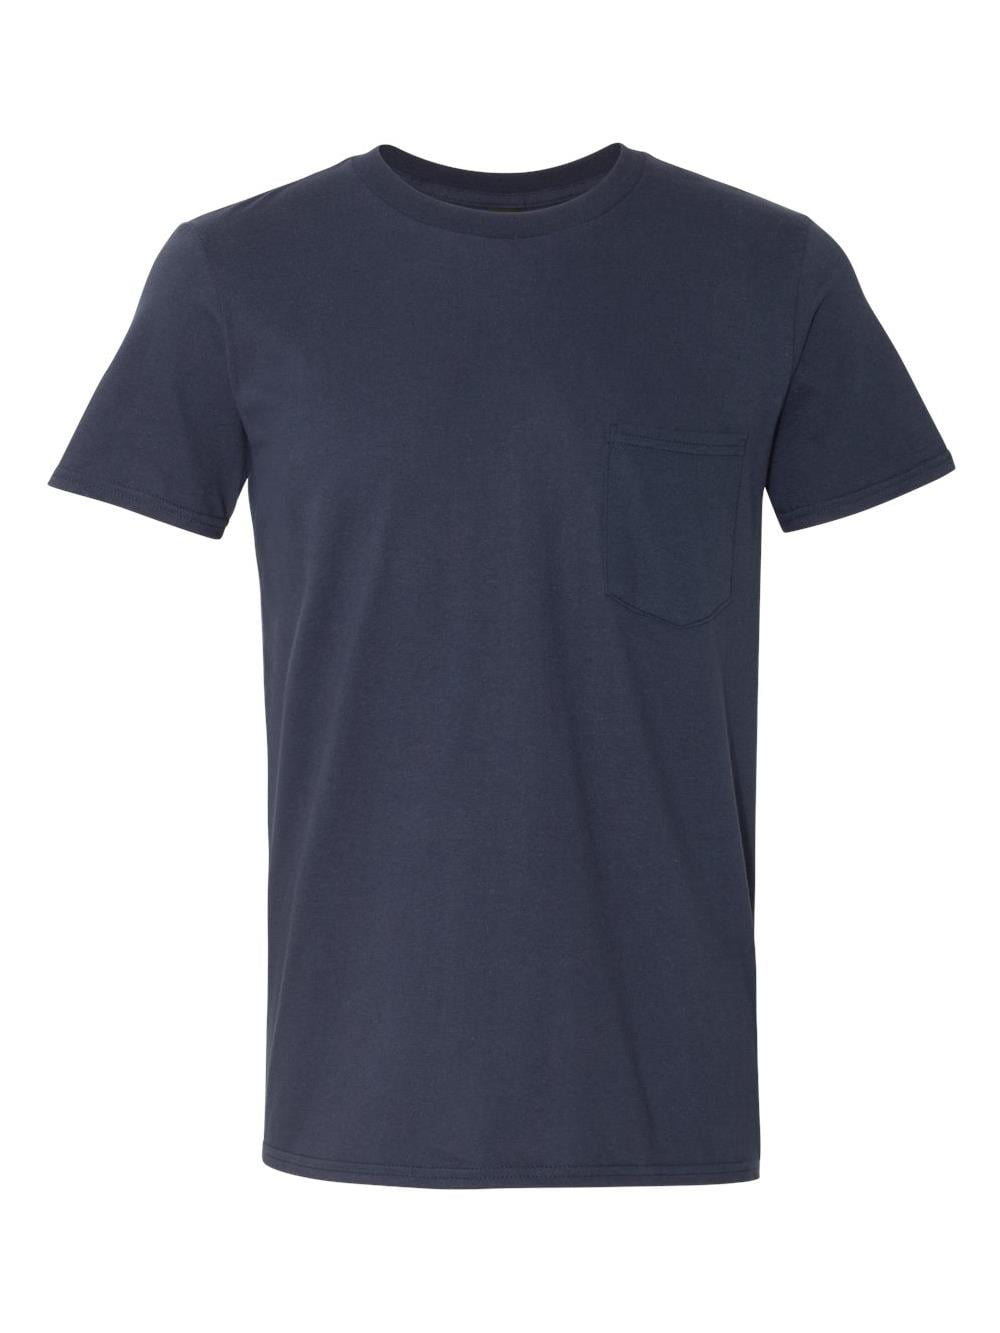 Anvil - Anvil T-Shirts Lightweight Pocket T-Shirt 983 - Walmart.com ...